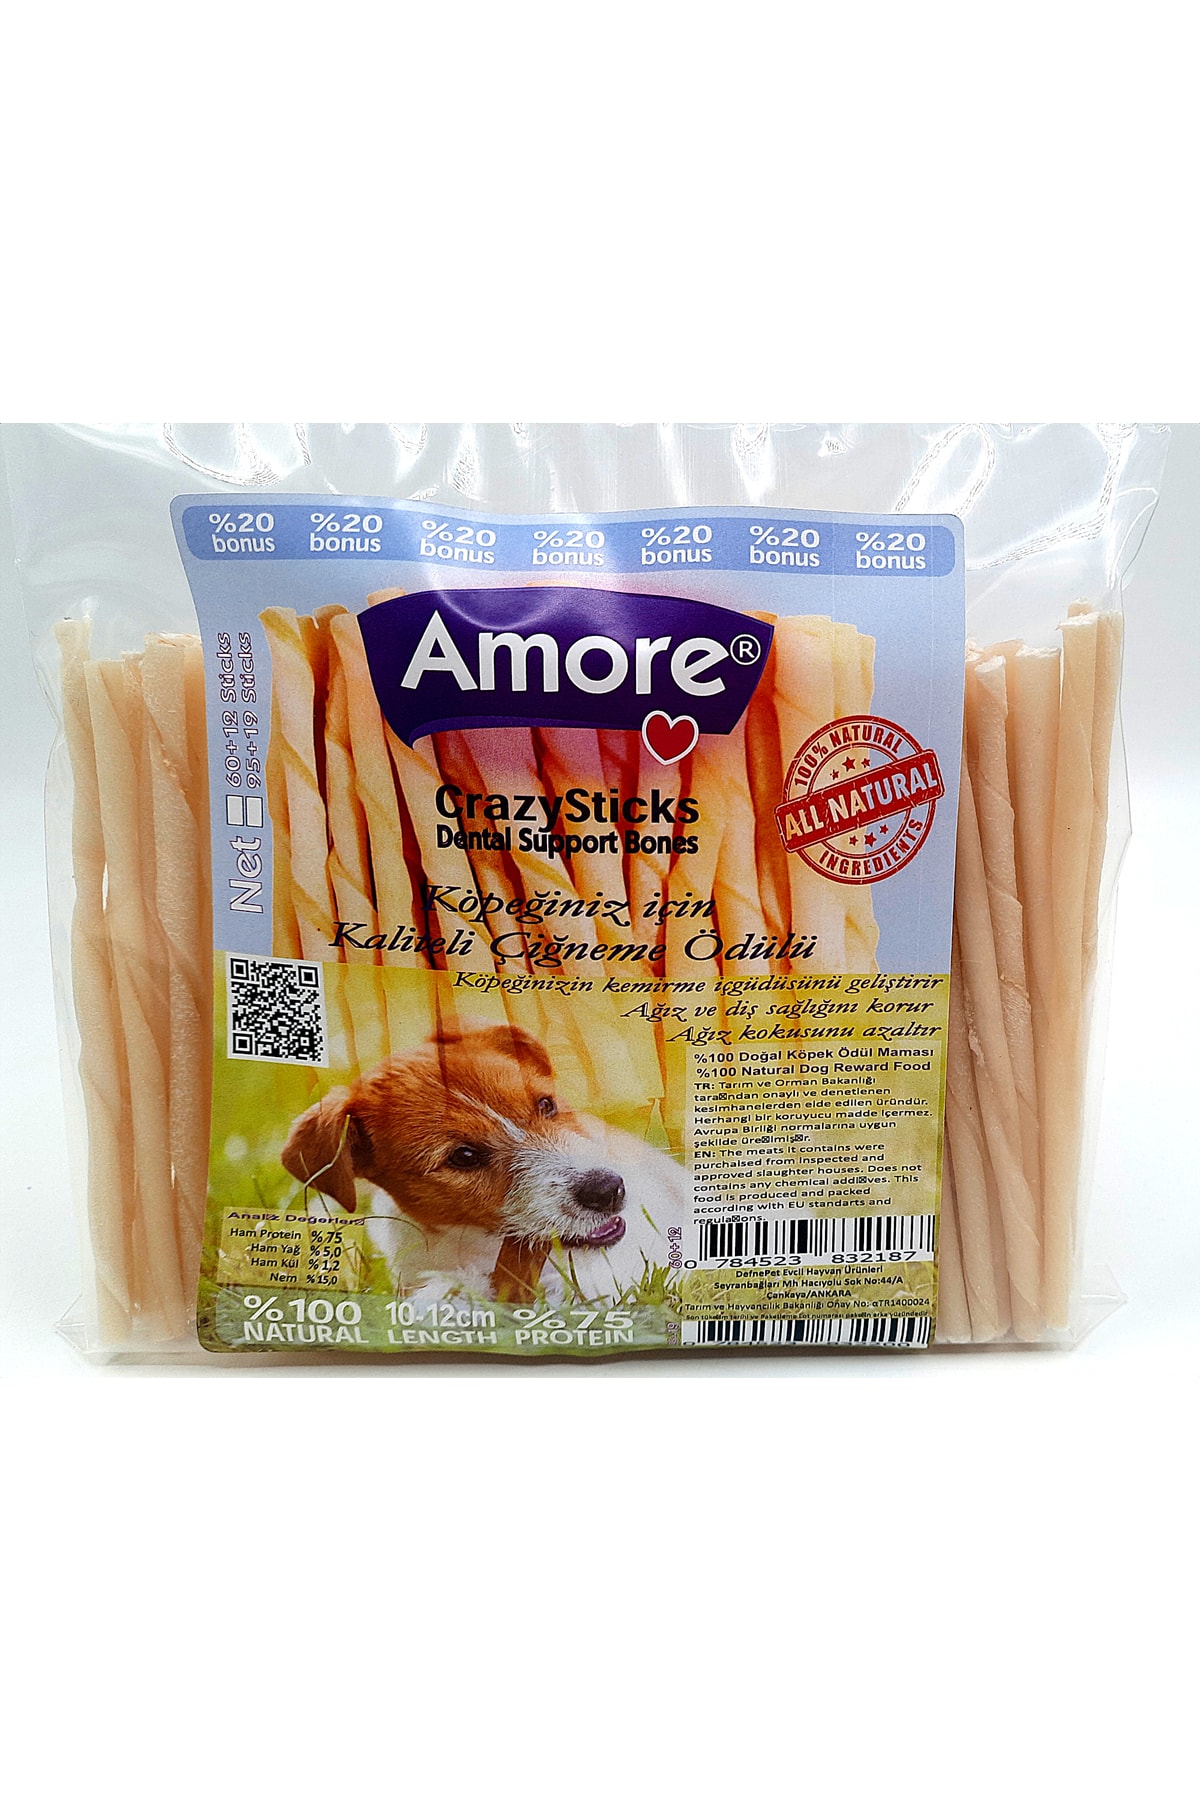 Amoredog Crazy Dog Sticks Kopek Cigneme Odul Cubuklari Natural 95+19 Adet Bonus Pack